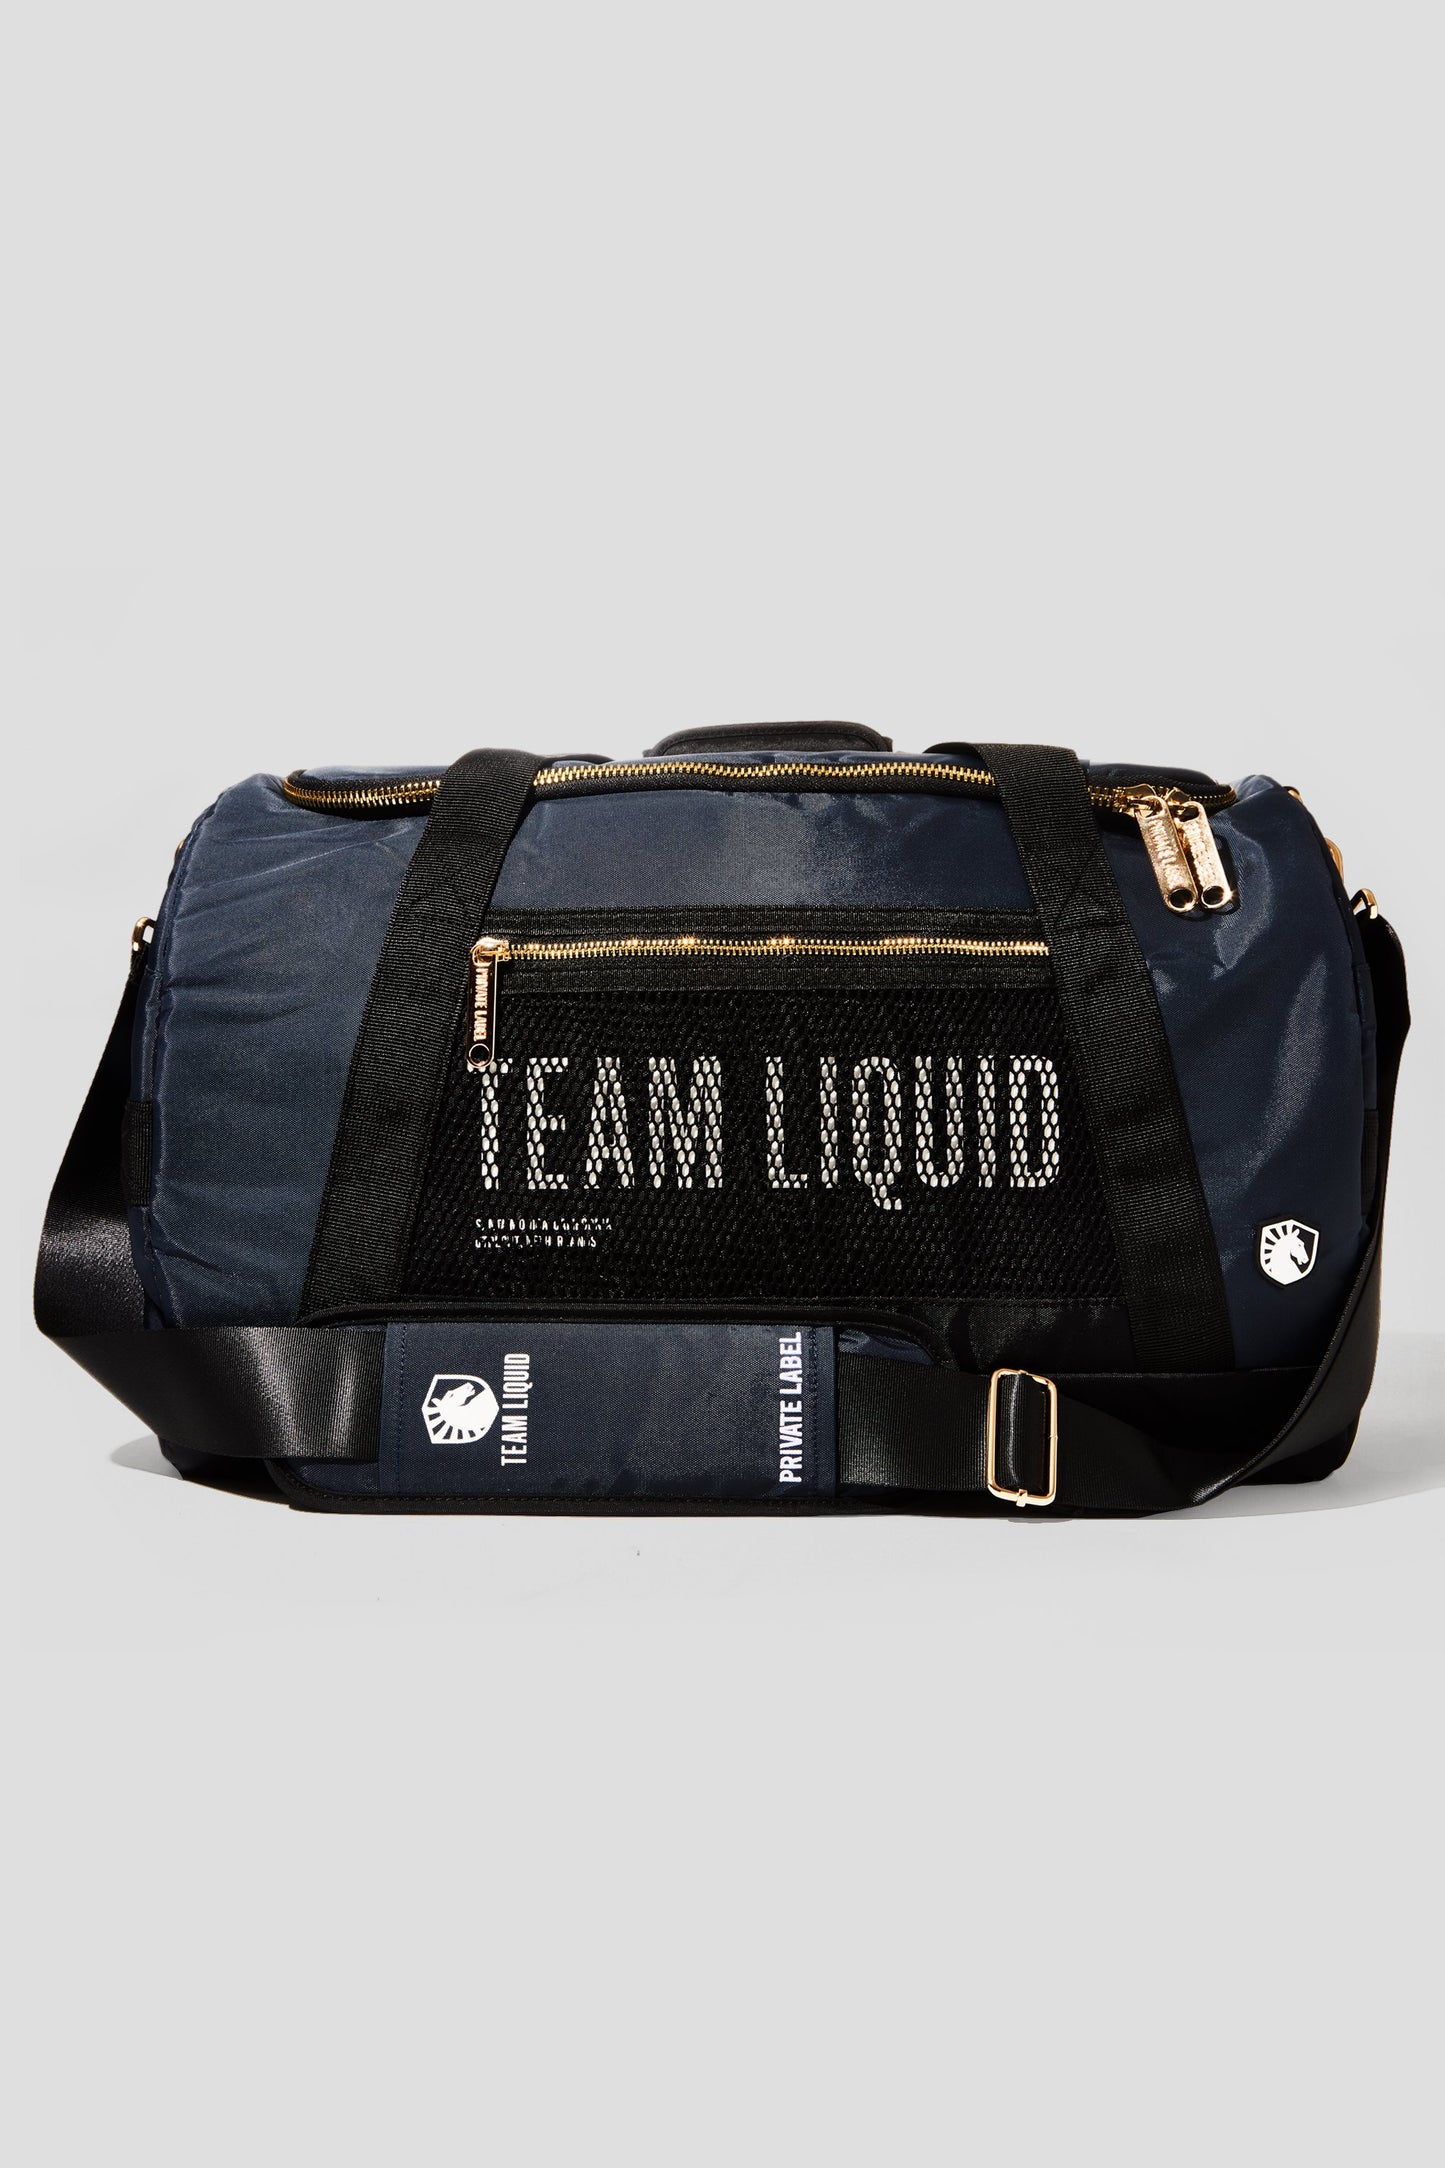 Team Liquid x Private Label - Weekender Duffel (PRE-ORDER) - Team Liquid